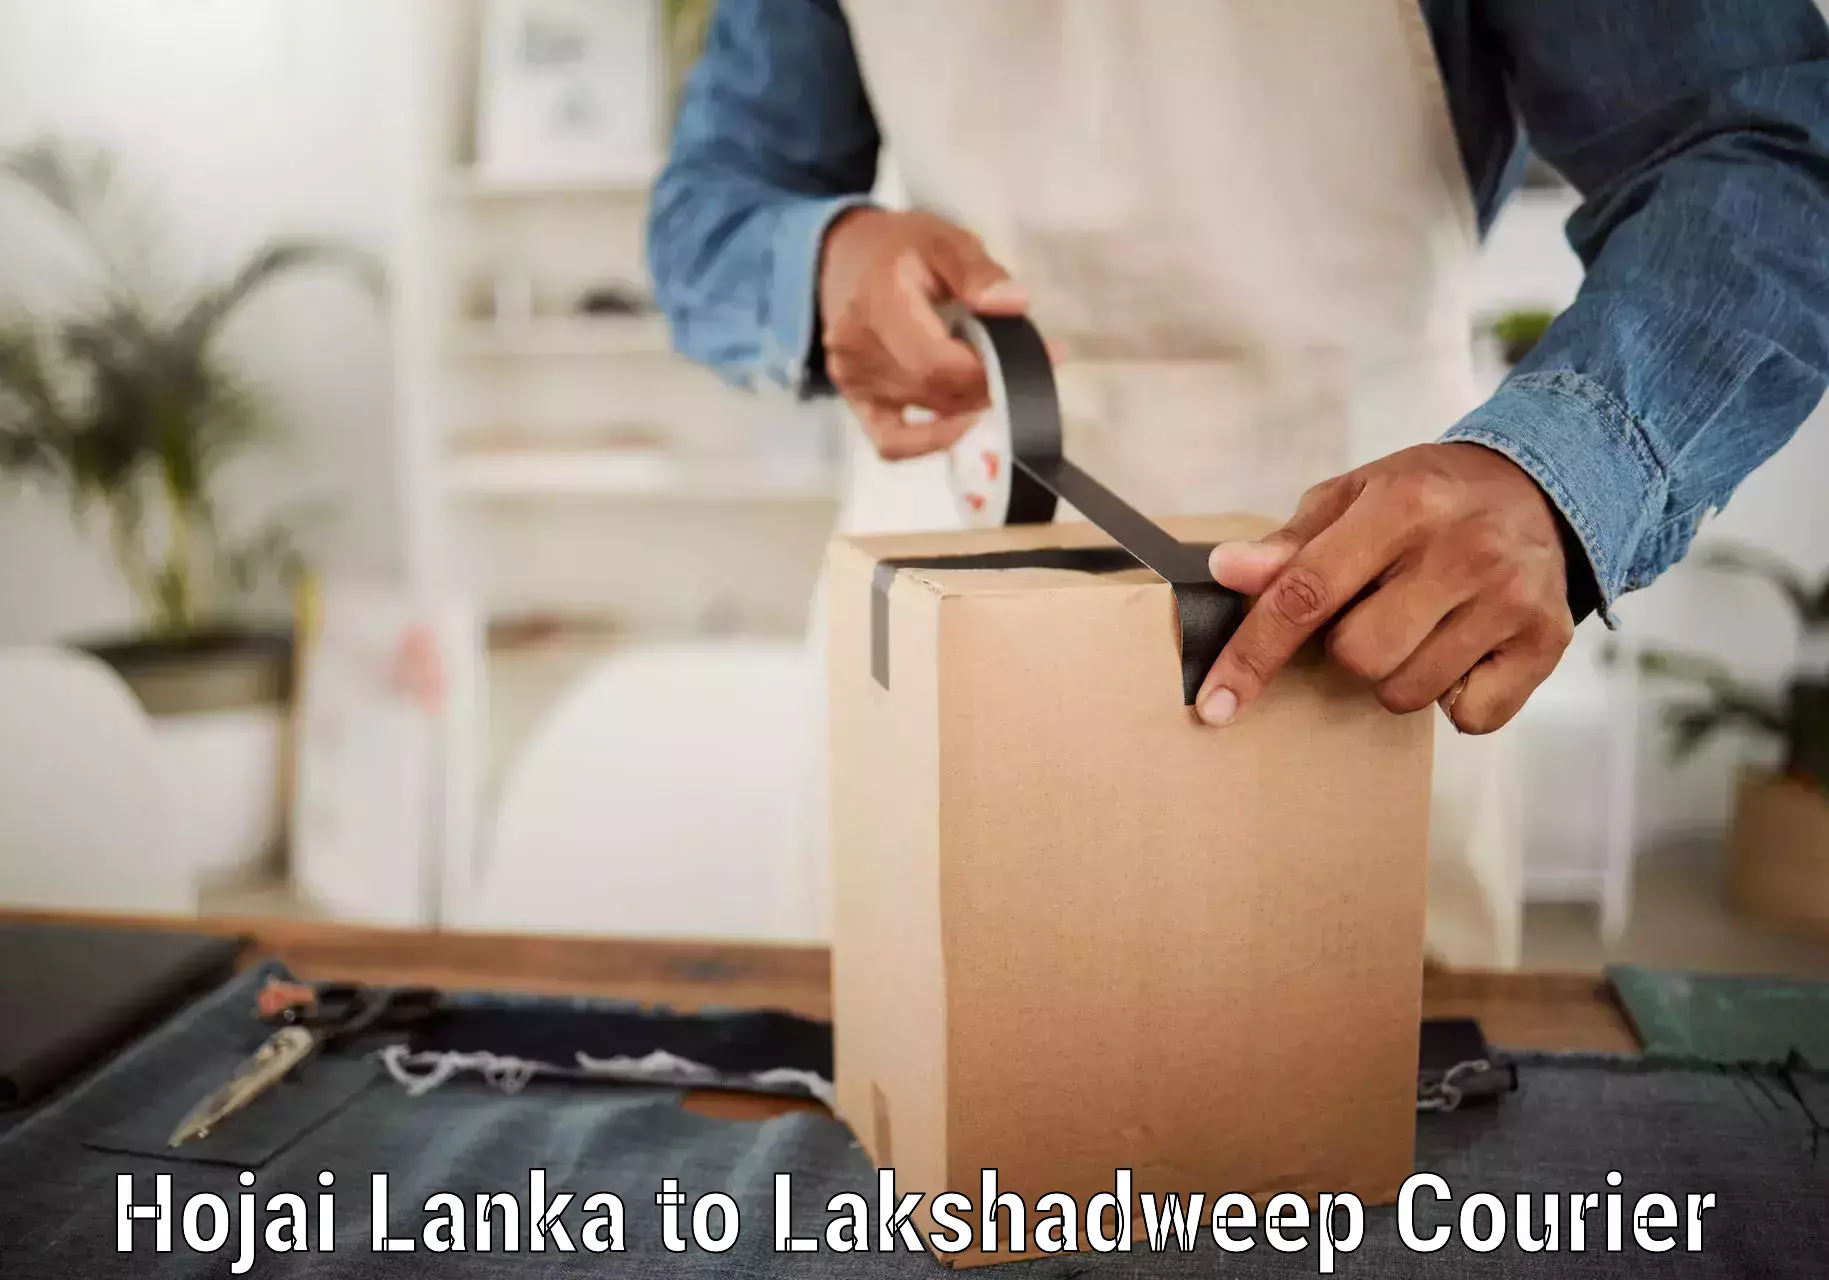 Express delivery network Hojai Lanka to Lakshadweep